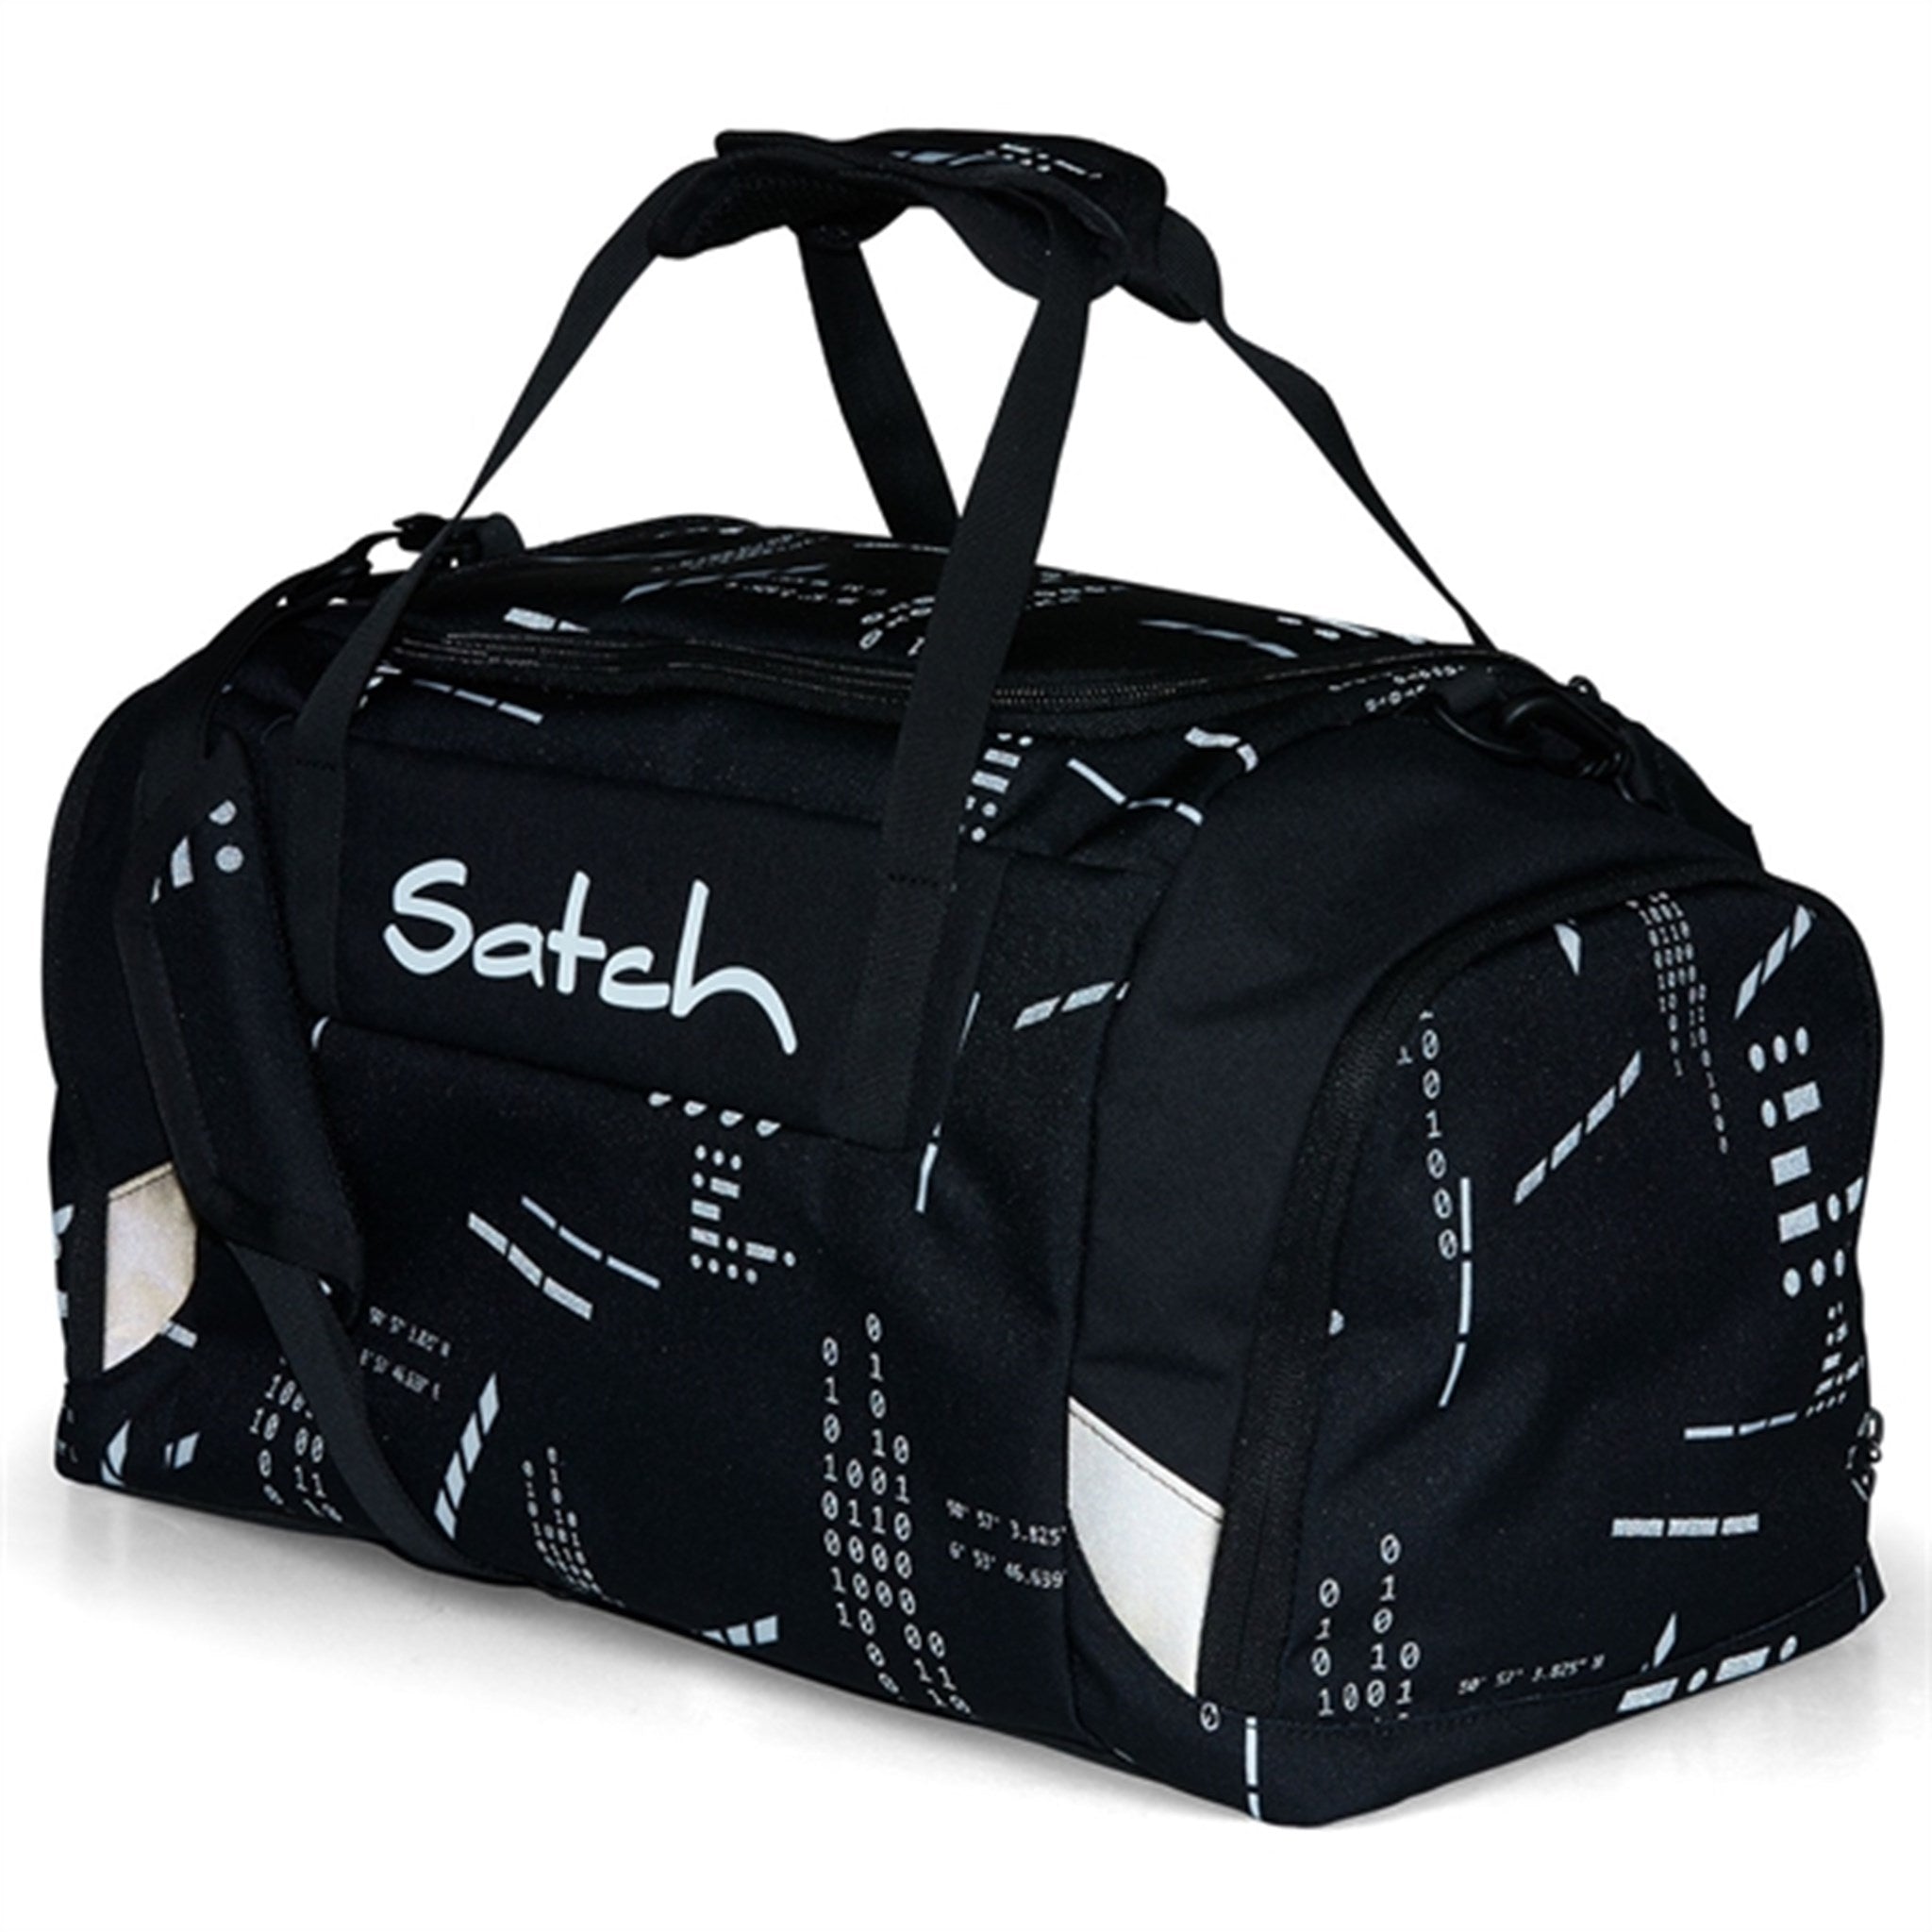 Satch Sports Bag Ninja Matrix 2